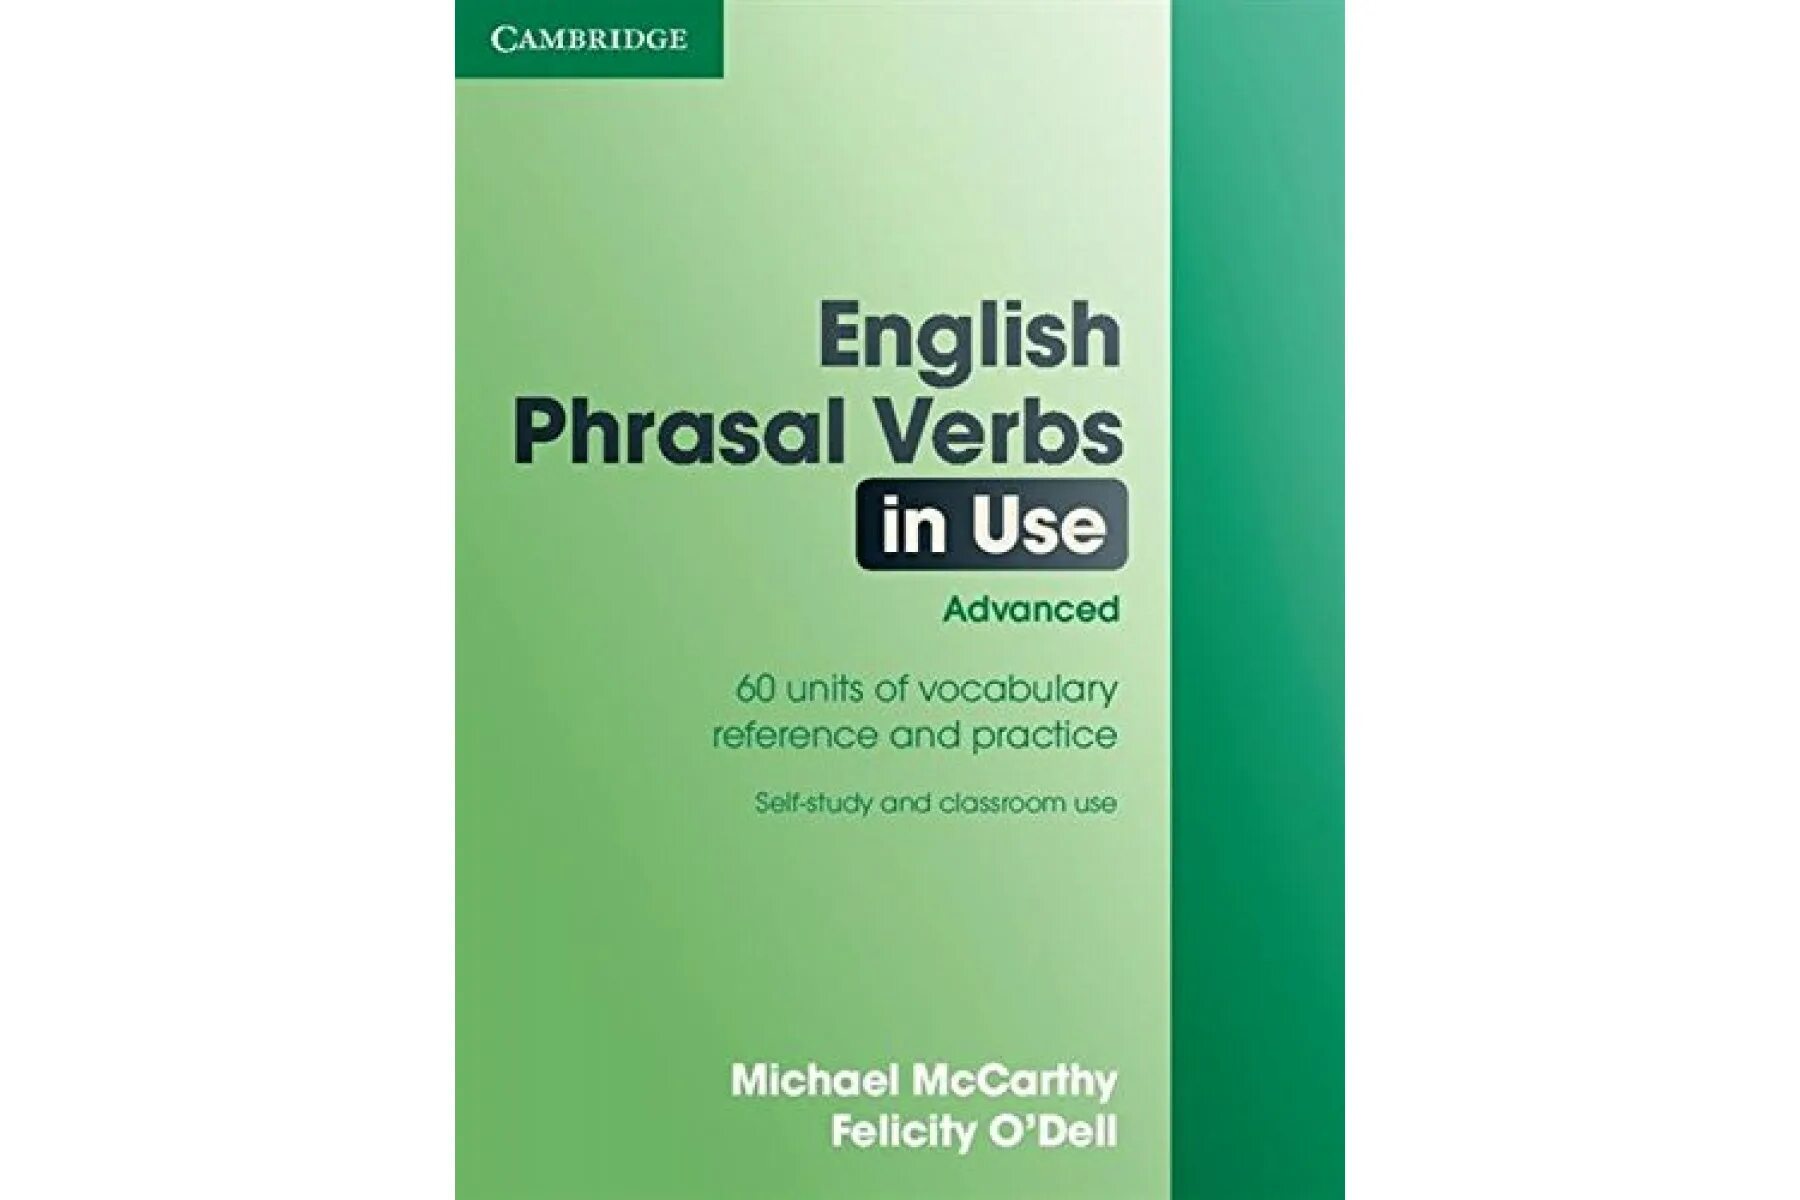 Cambridge English Phrasal verbs in use Intermediate. Cambridge Phrasal verbs in use. English in use Cambridge Phrasal verbs. English Phrasal verbs in use Advanced. Phrasal units